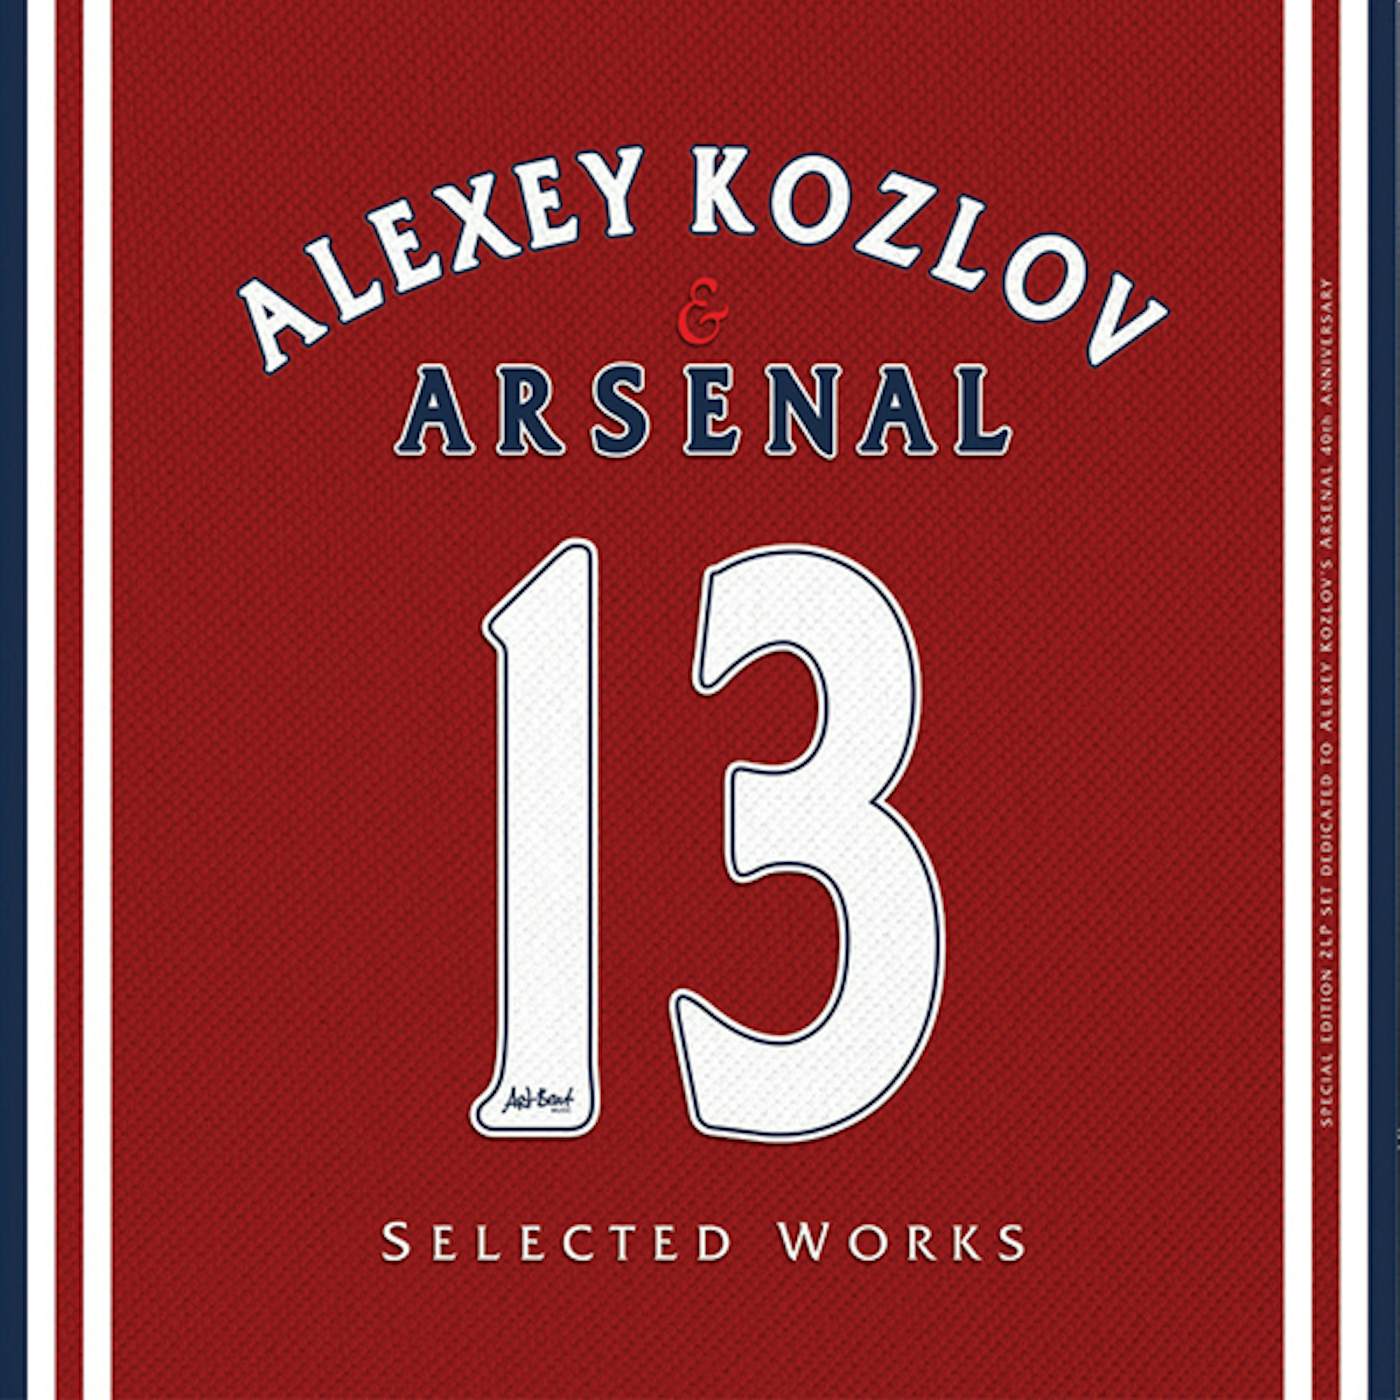 Alexey Kozlov & ARSENAL 13. Selected Works Vinyl Record